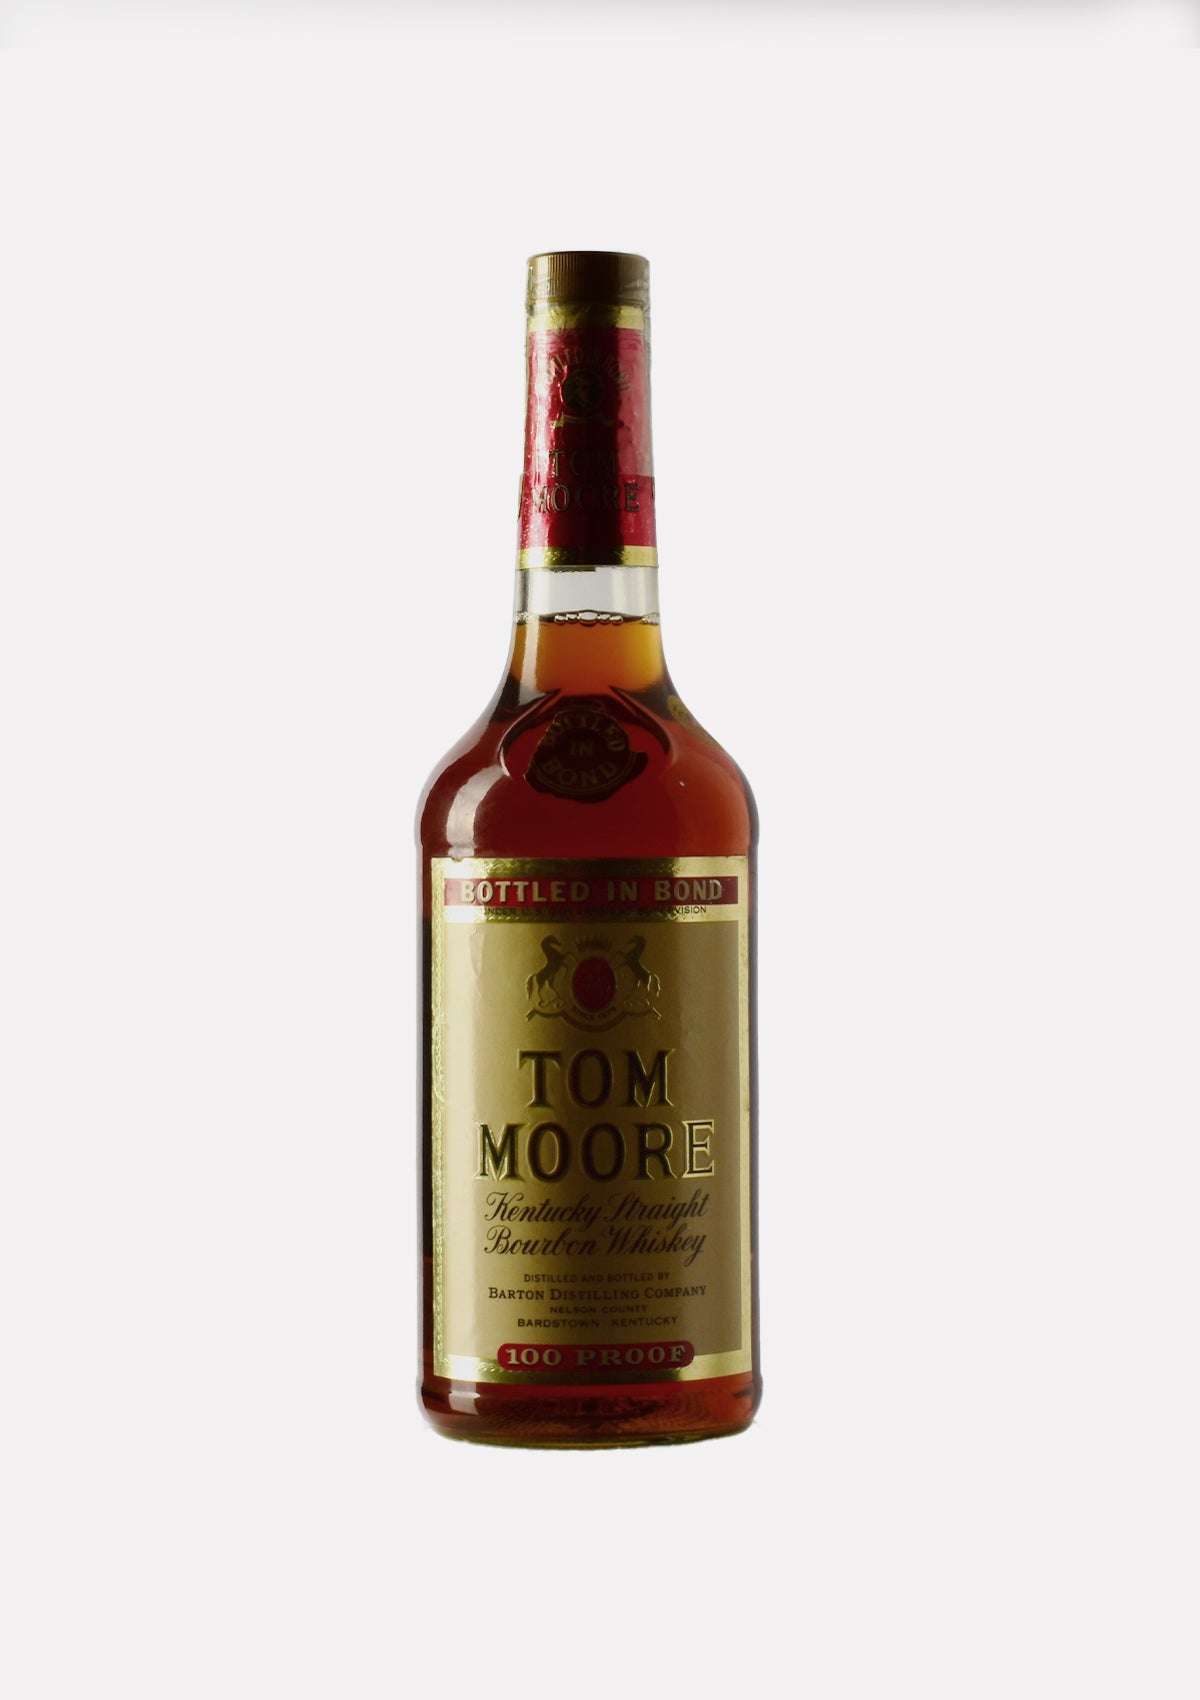 Tom Moore Kentucky Straight Bourbon Whiskey